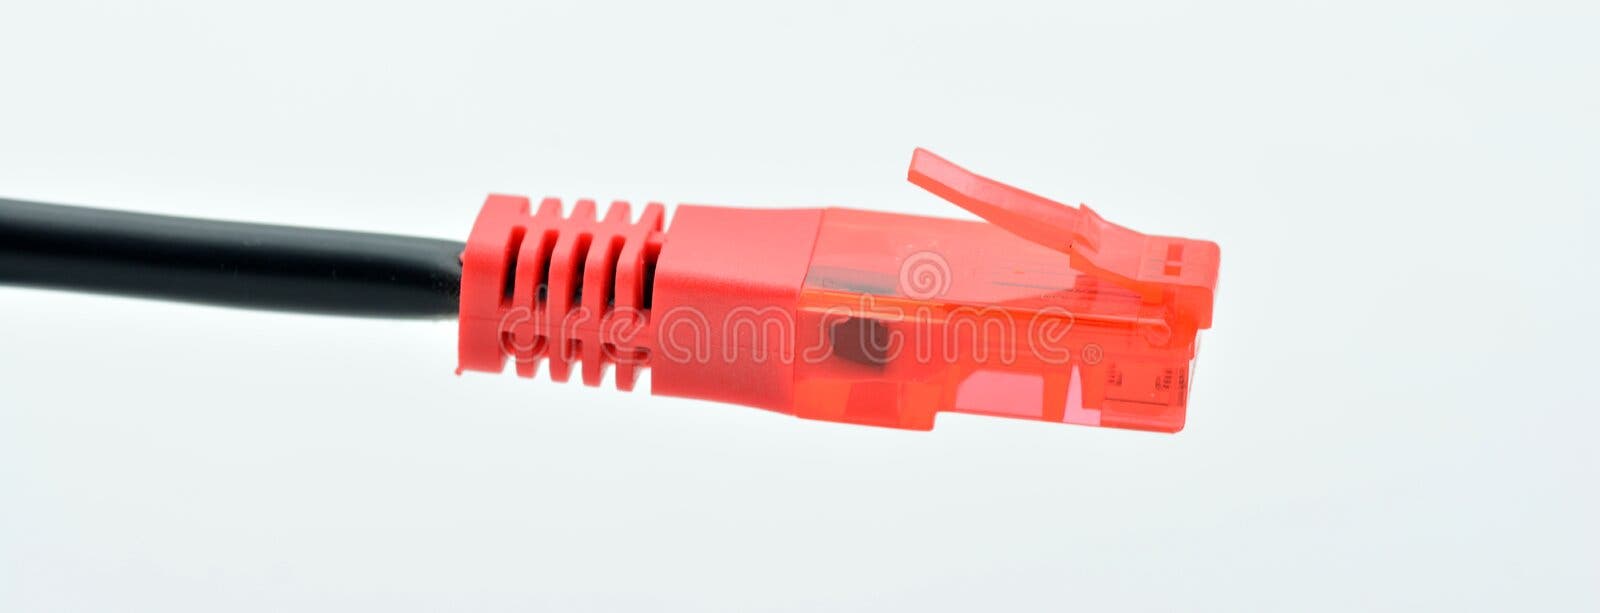 Constitución caricia desnudo Red ADSL Connector Cable, Isolated on White Stock Photo - Image of aislado,  conexiones: 247550840